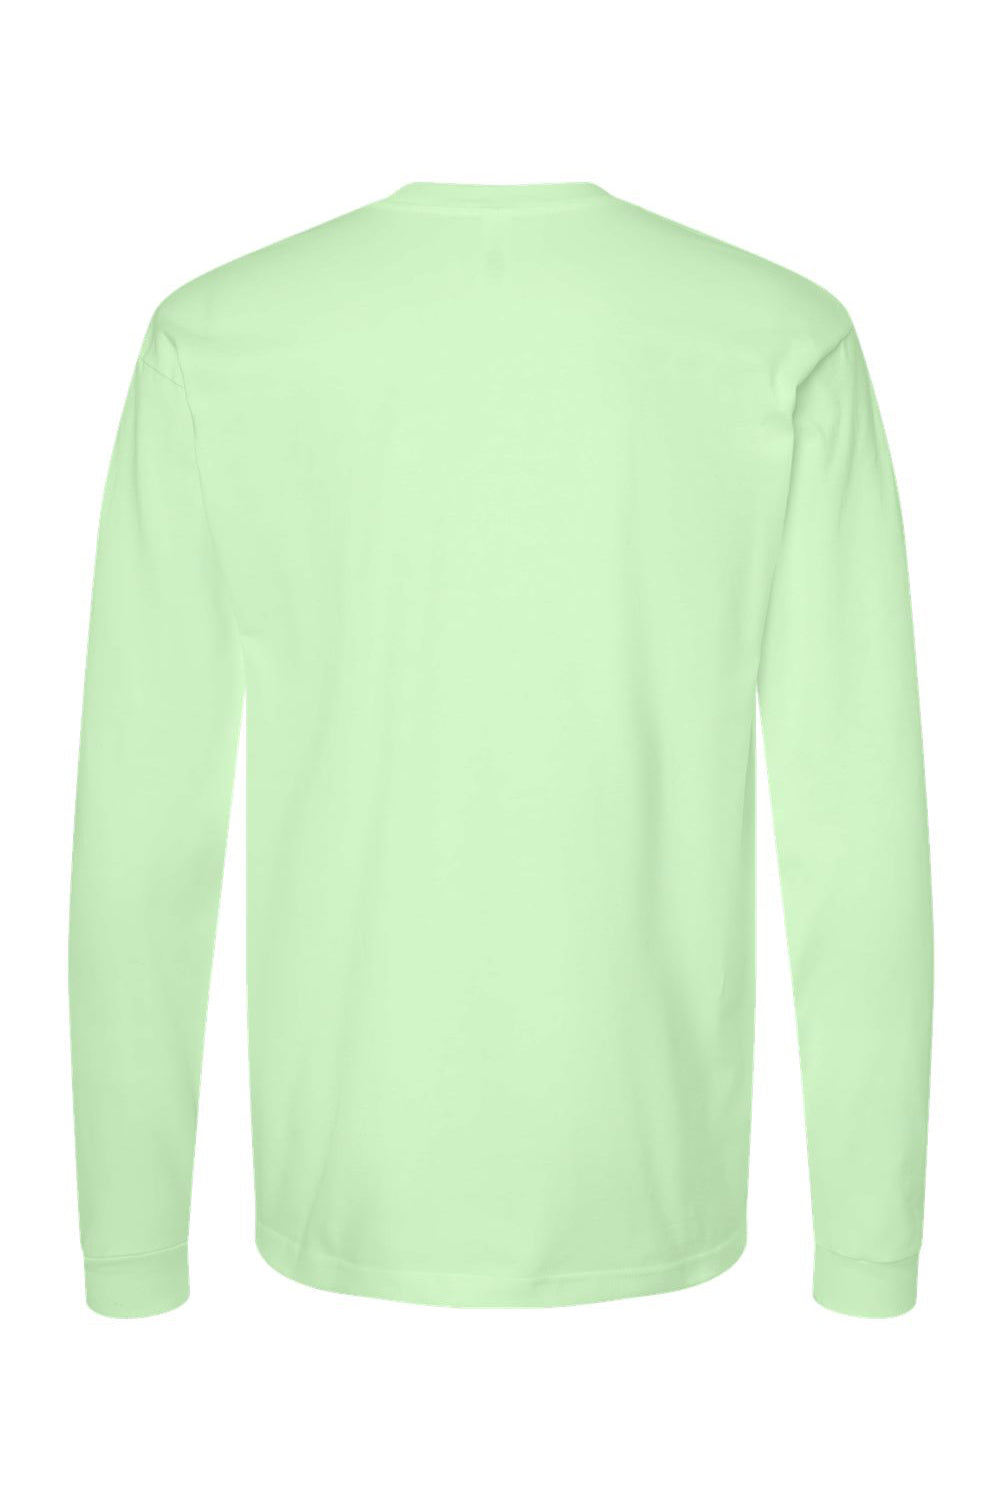 Tultex 291 Mens Jersey Long Sleeve Crewneck T-Shirt Neo Mint Green Flat Back